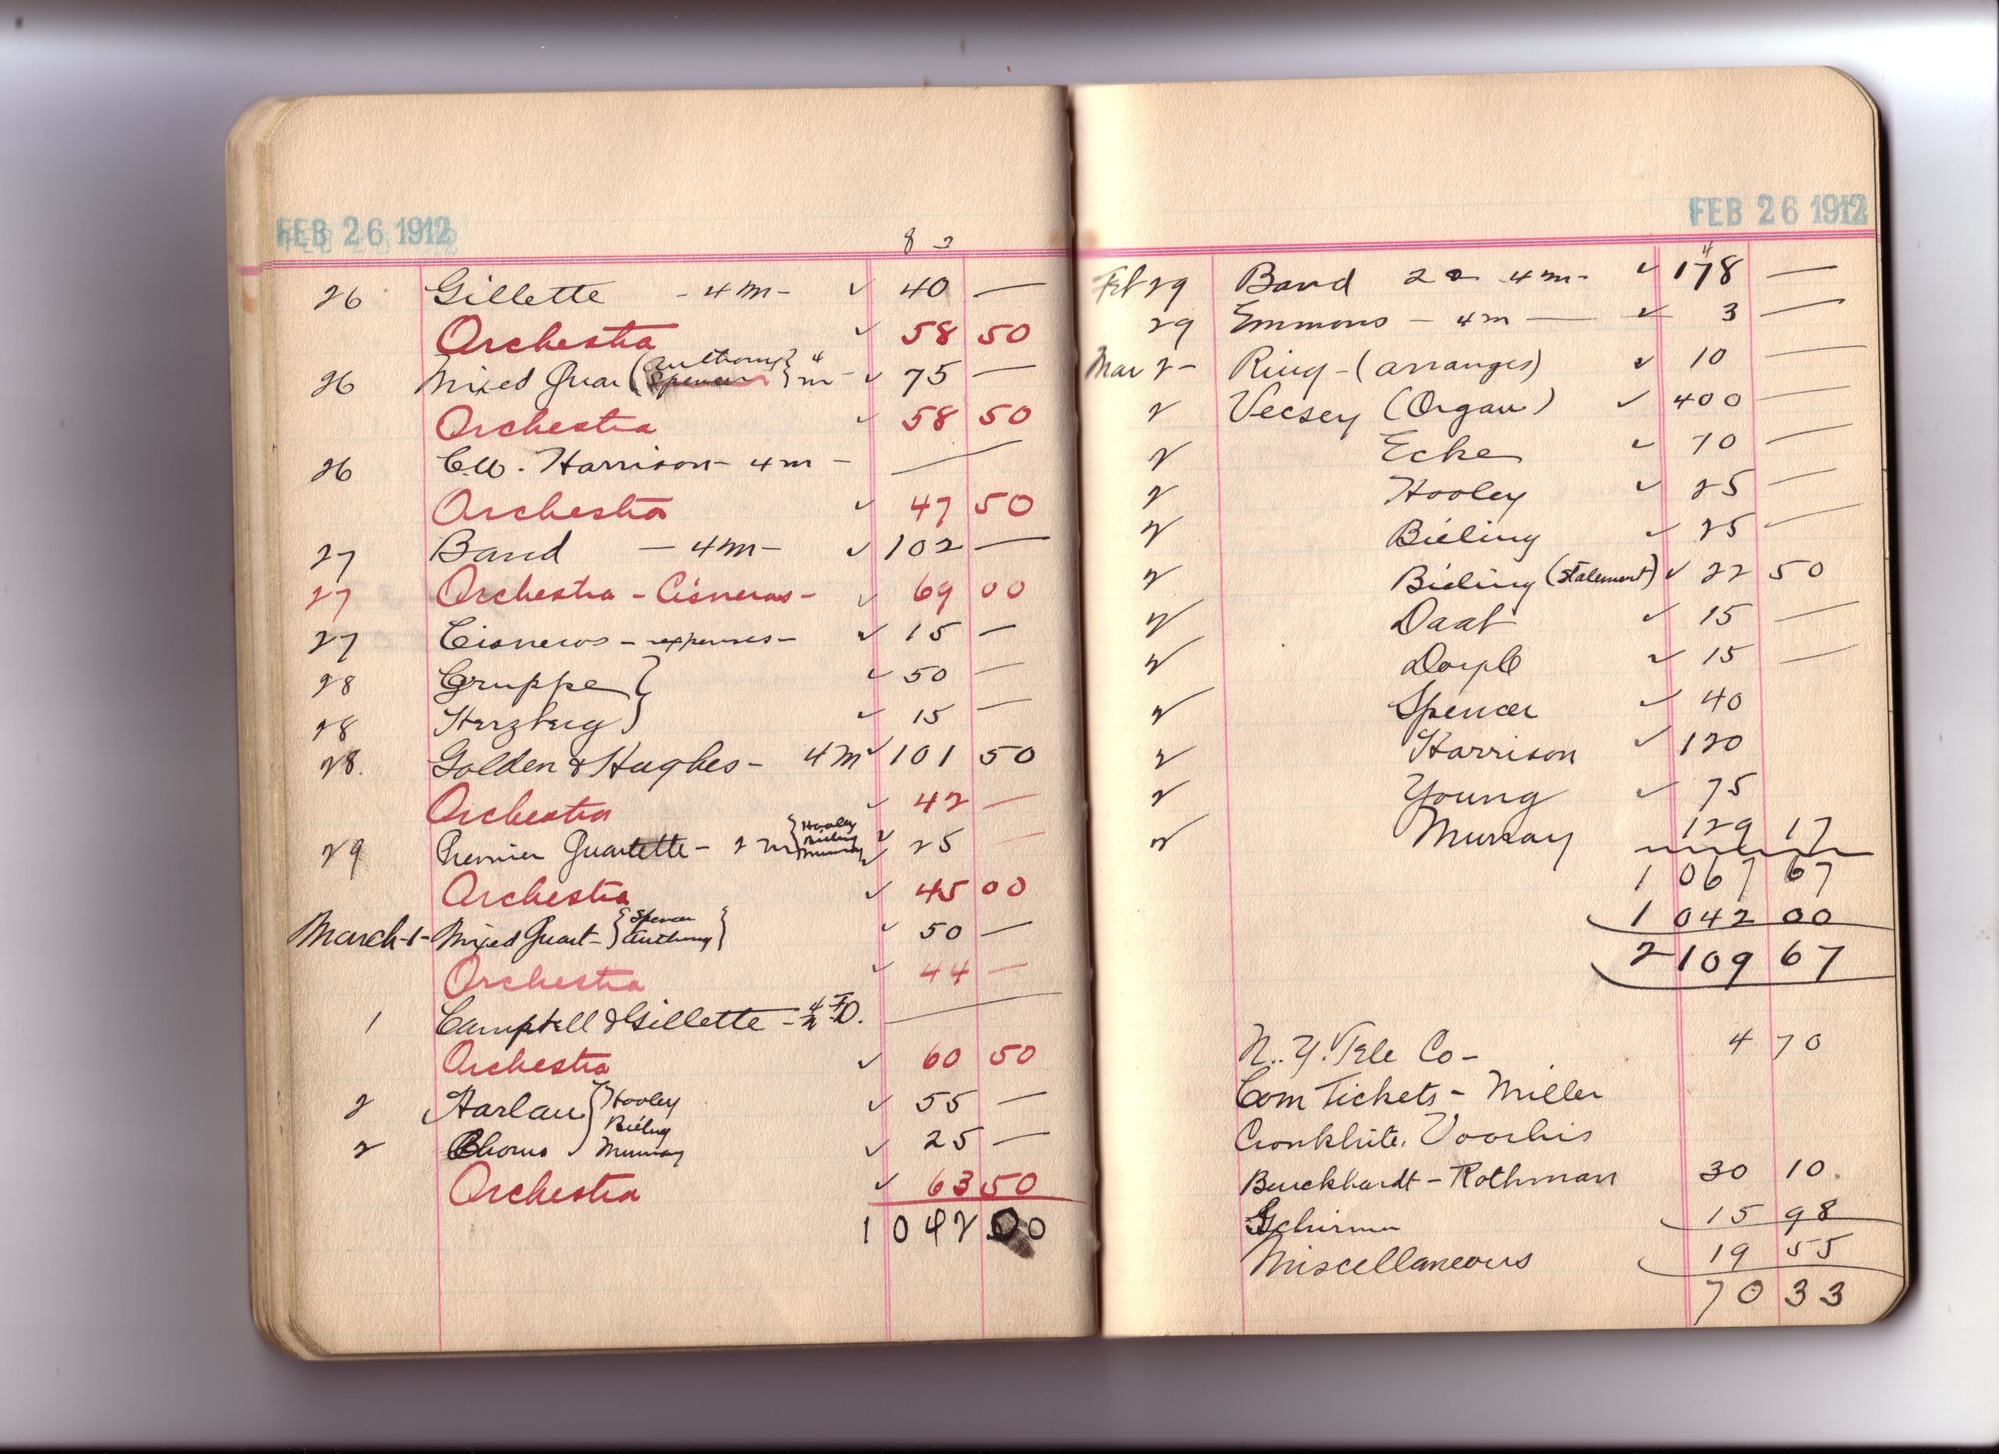 Thomas Edison's New York City Recording Studio Cash Book 08 (of 21), Image 37 (of 49).